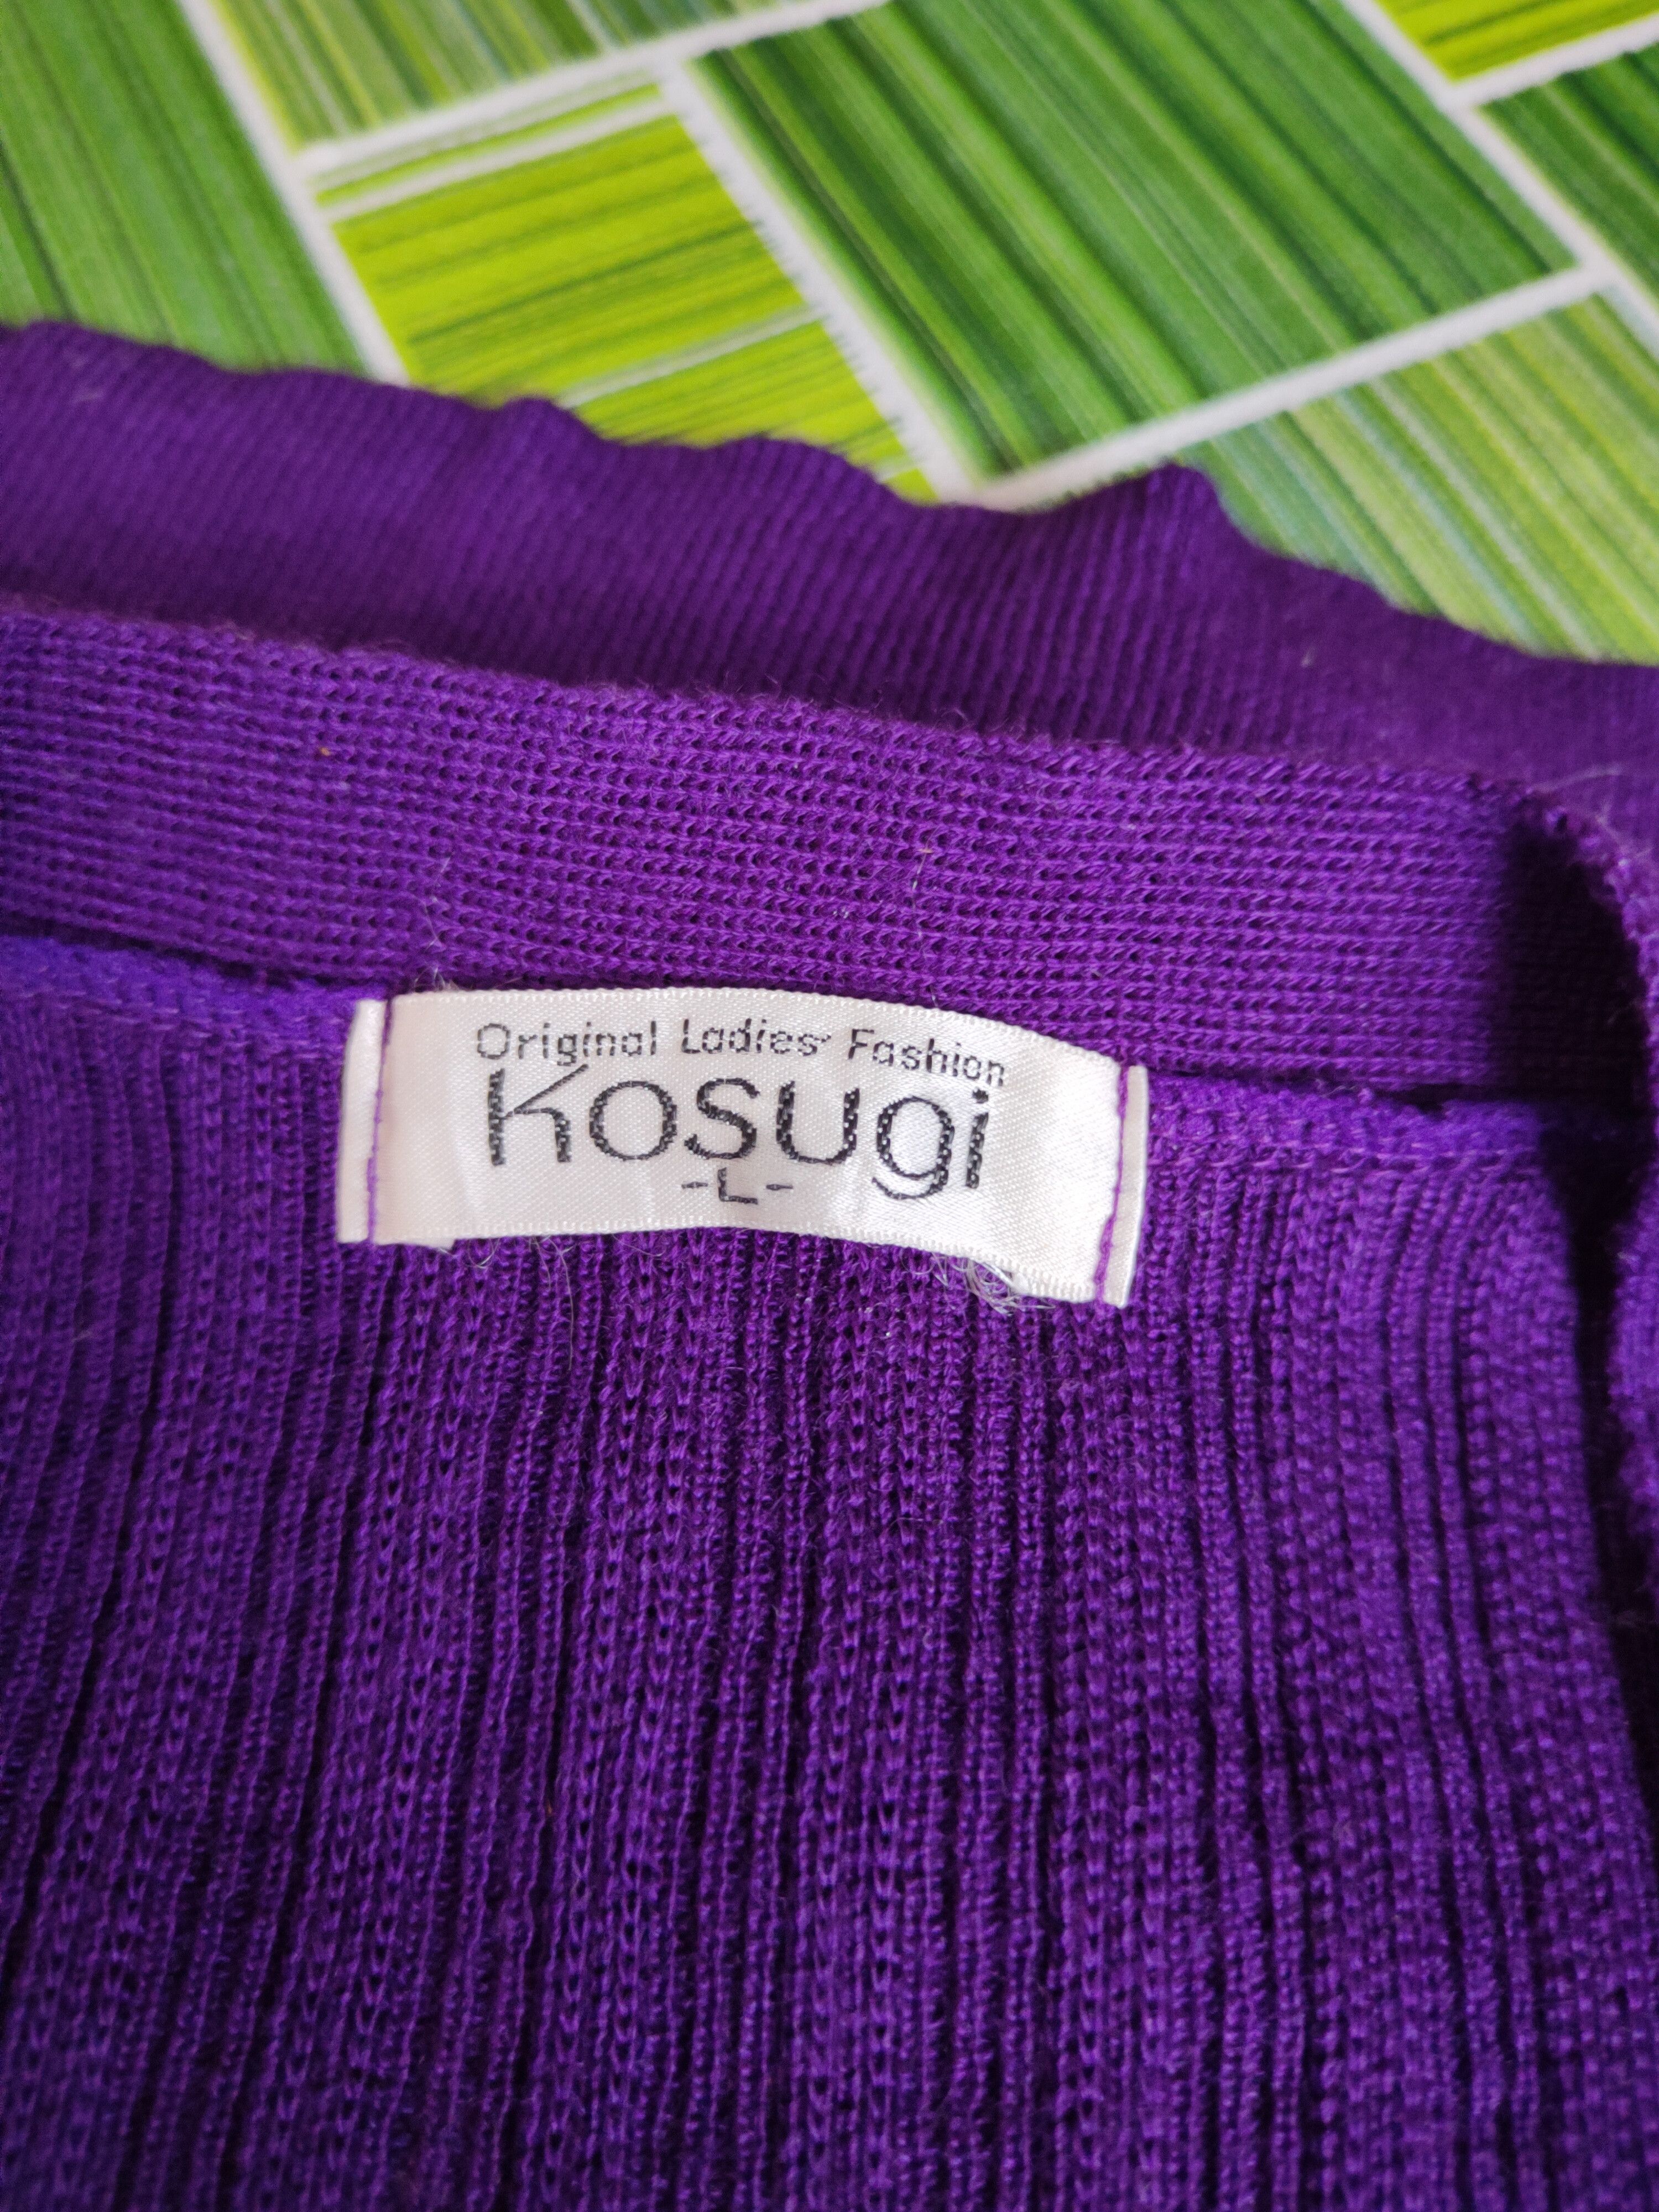 Japanese Brand Kosugi Purple Knitwear Cardigan Crop Tops Size L / US 10 / IT 46 - 11 Preview